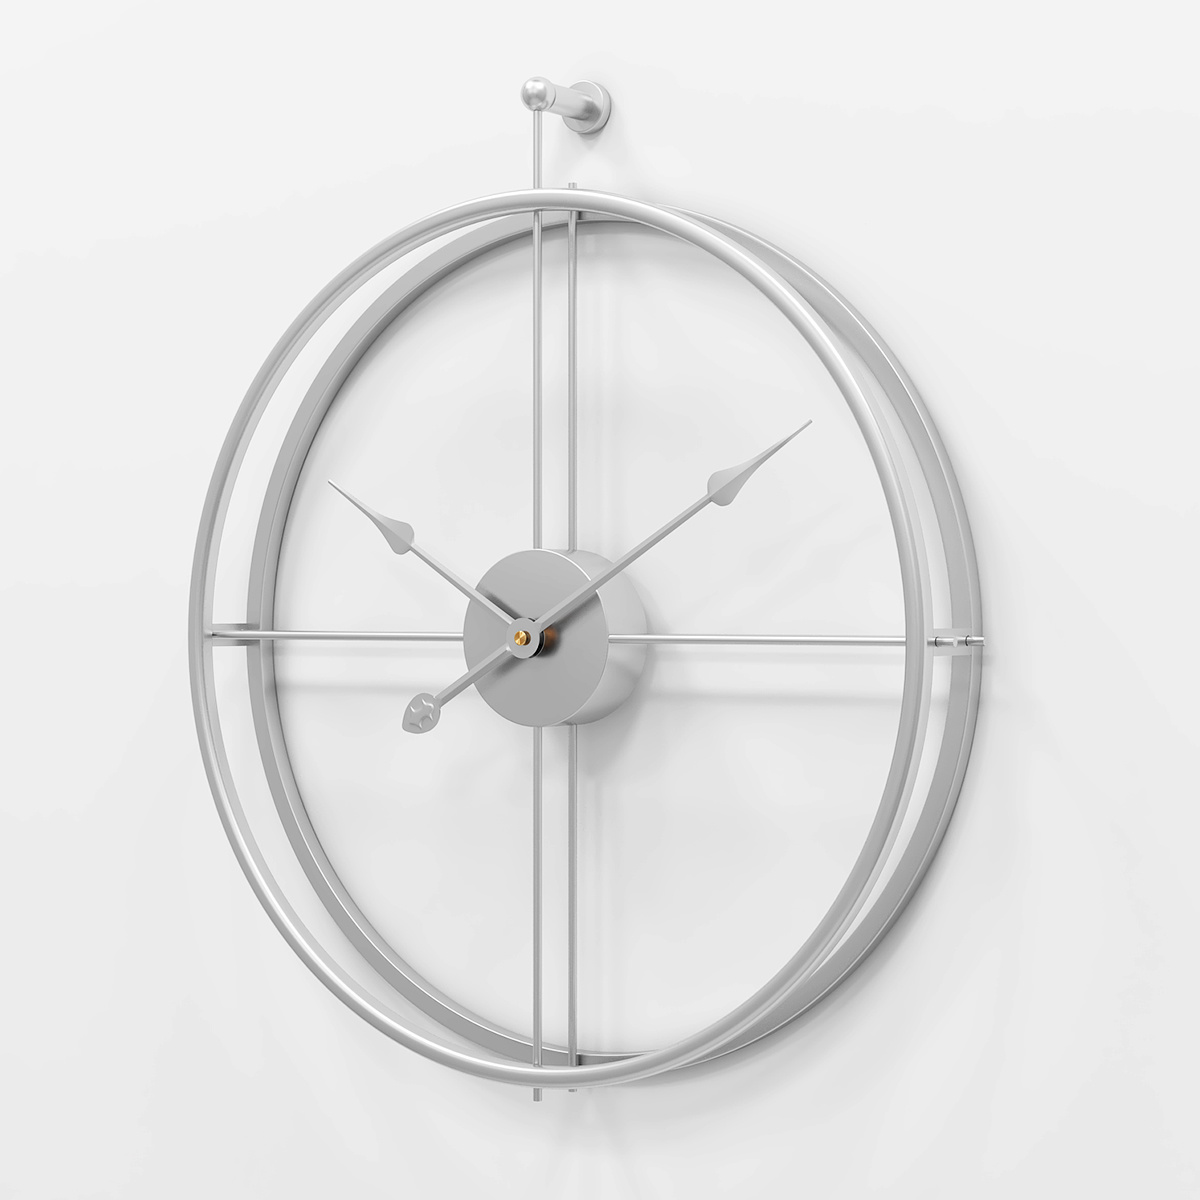 EKEO - Moderne klok -Wandklok zonder cijfers - - zilver - - Lifestyle en Wonen